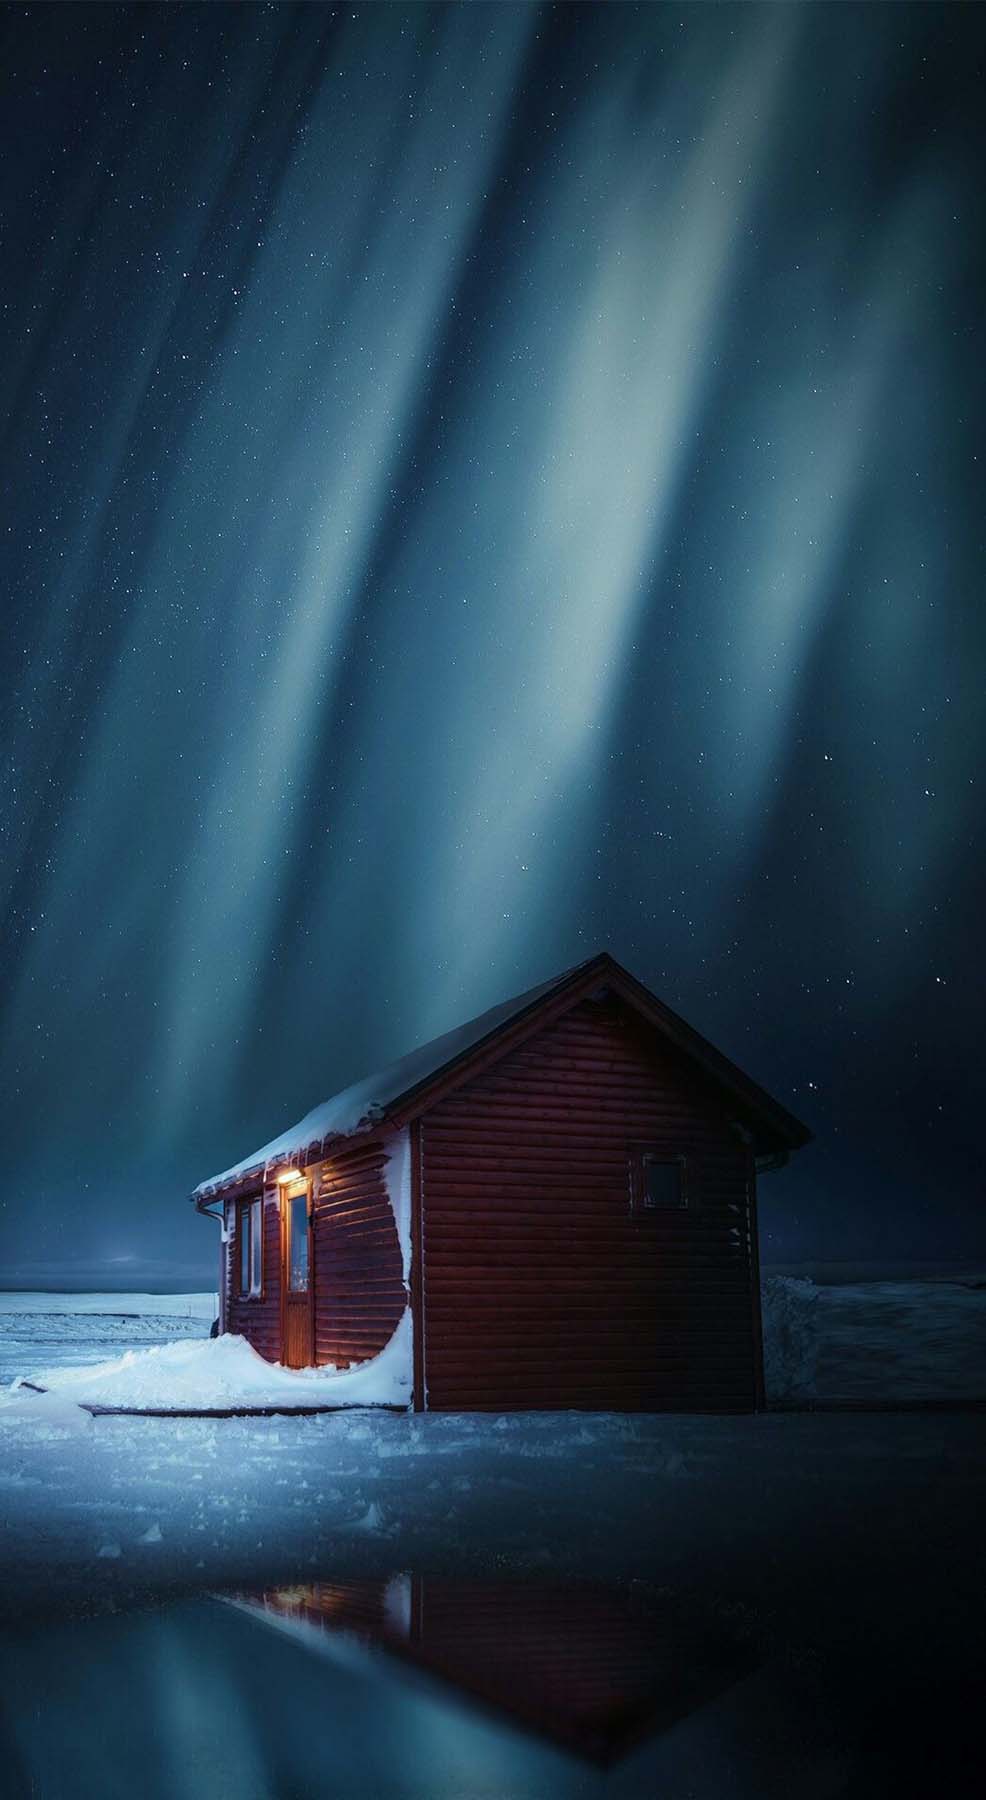 Cabana de madera de invierno IPhone Wallpaper HD